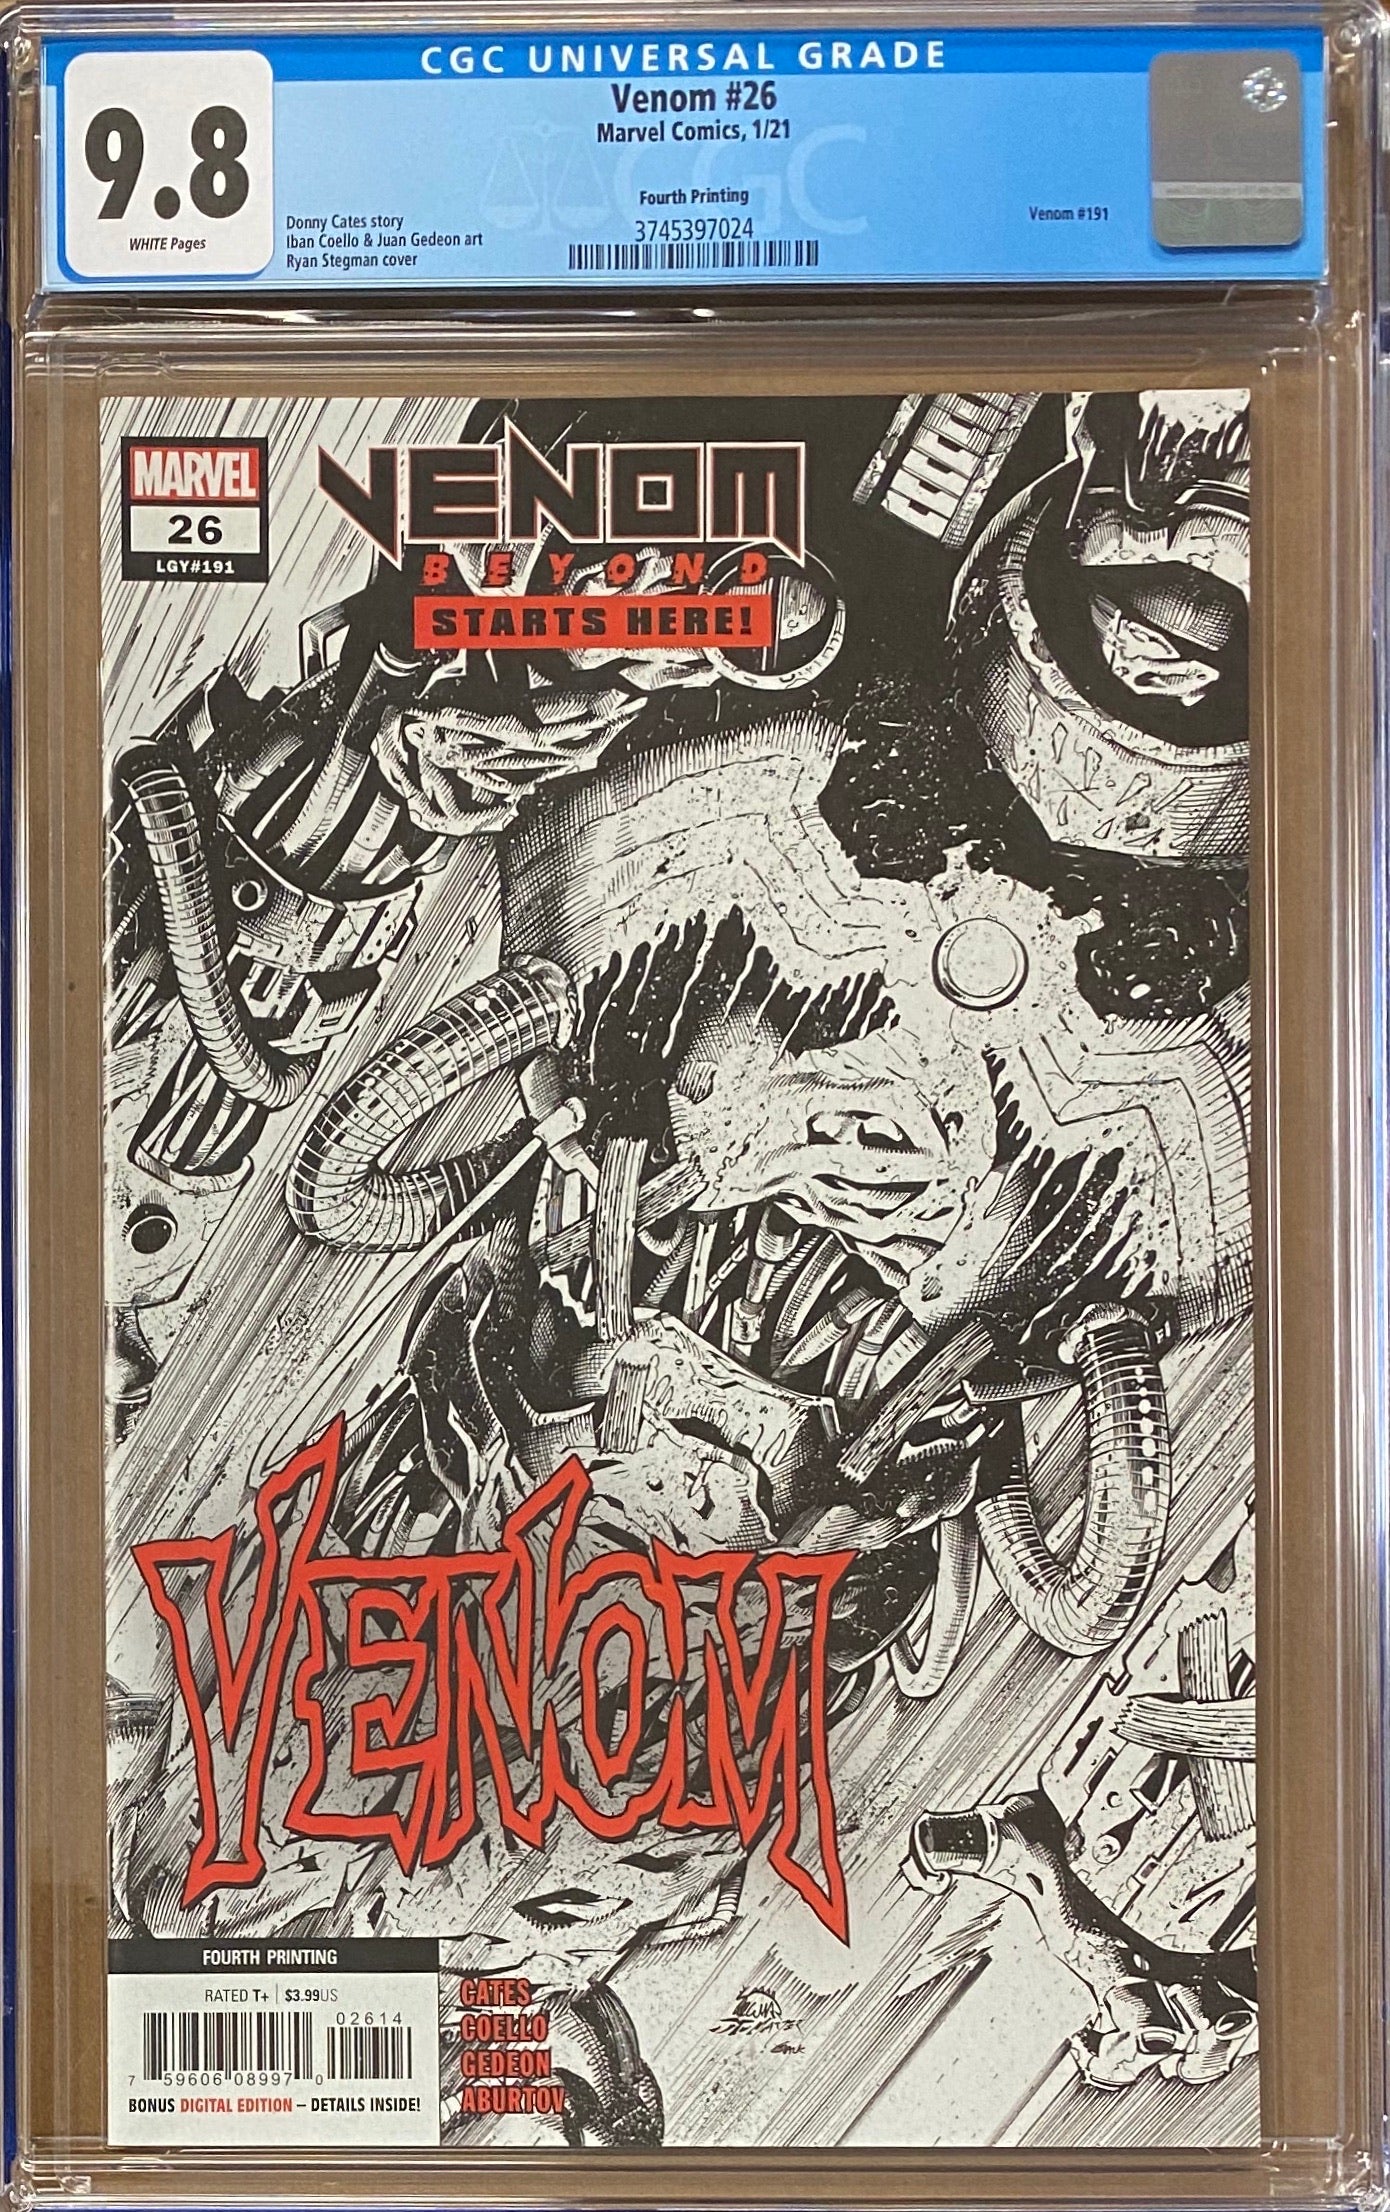 Venom #26 Fourth Printing CGC 9.8